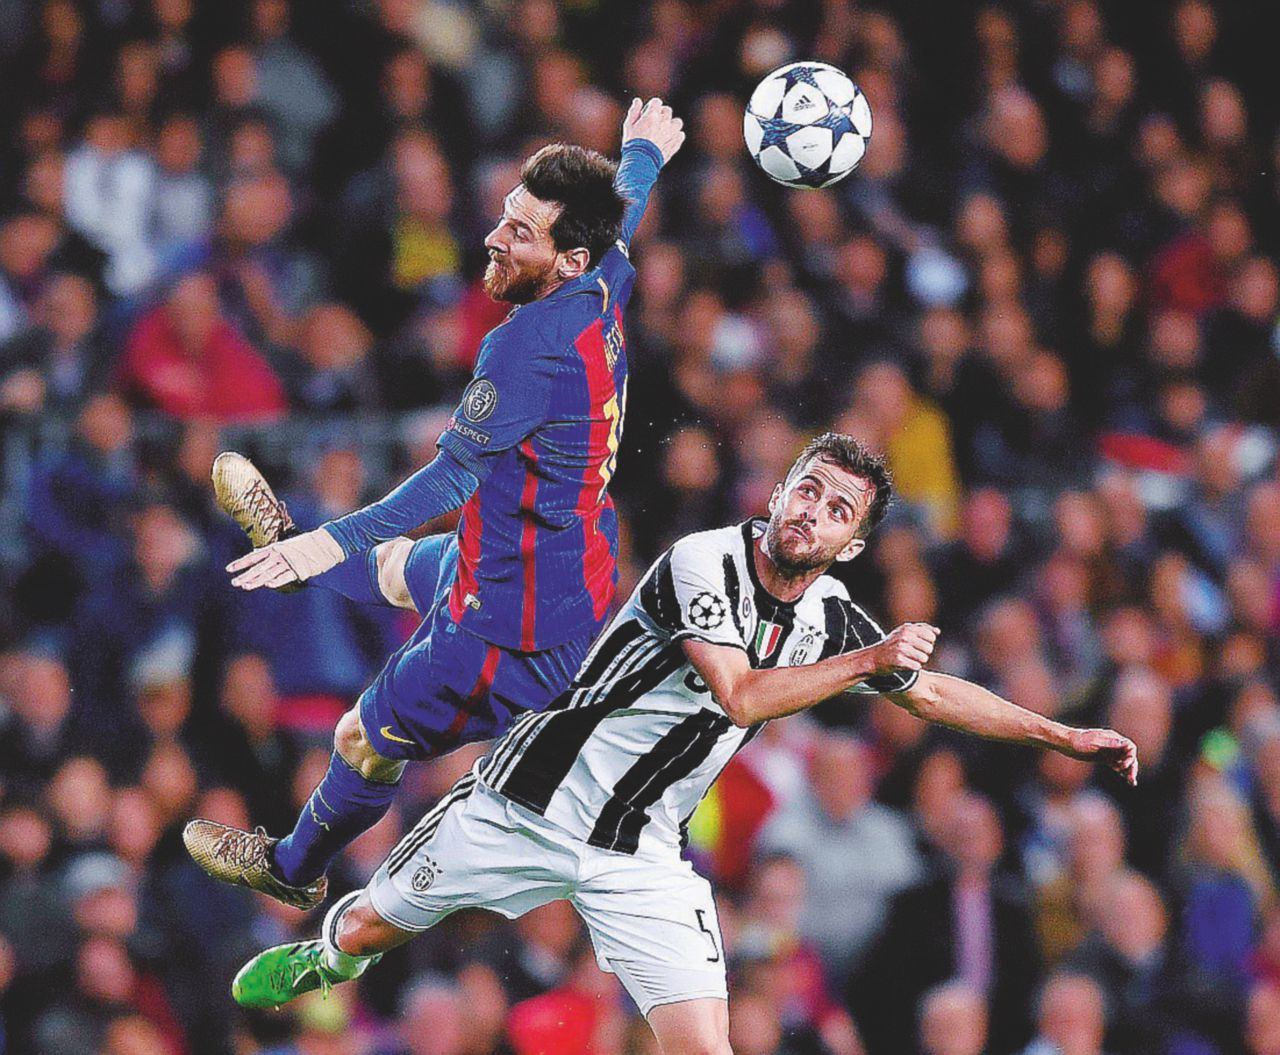 Copertina di Mediaset, truffa Juventus-Barcellona vista “in esclusiva”